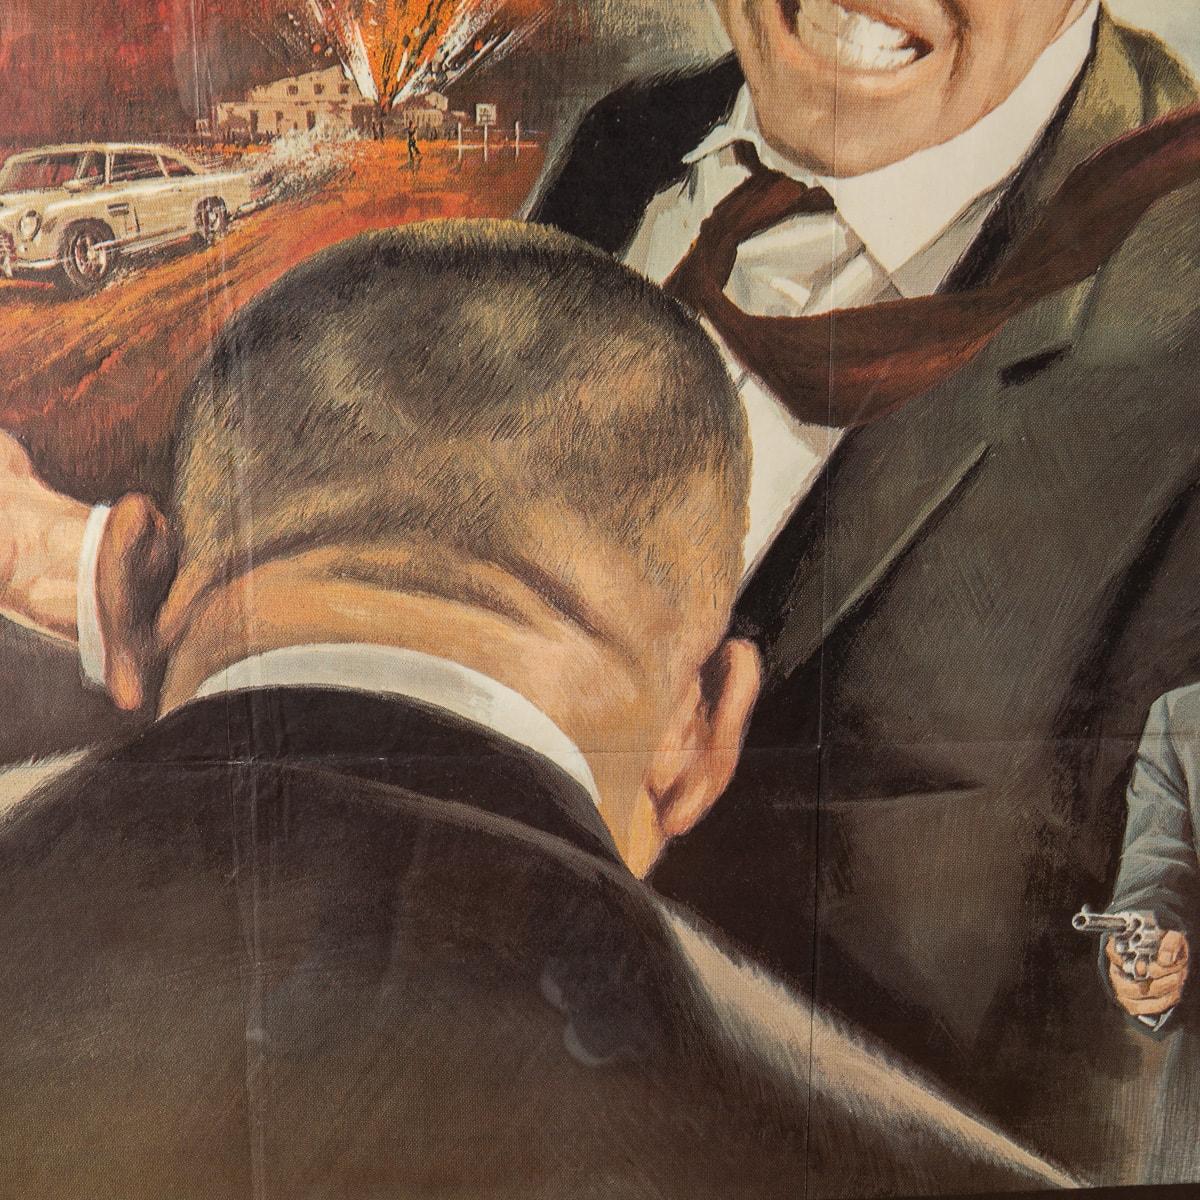 Original French Release James Bond Goldfinger Poster c.1964 For Sale 2